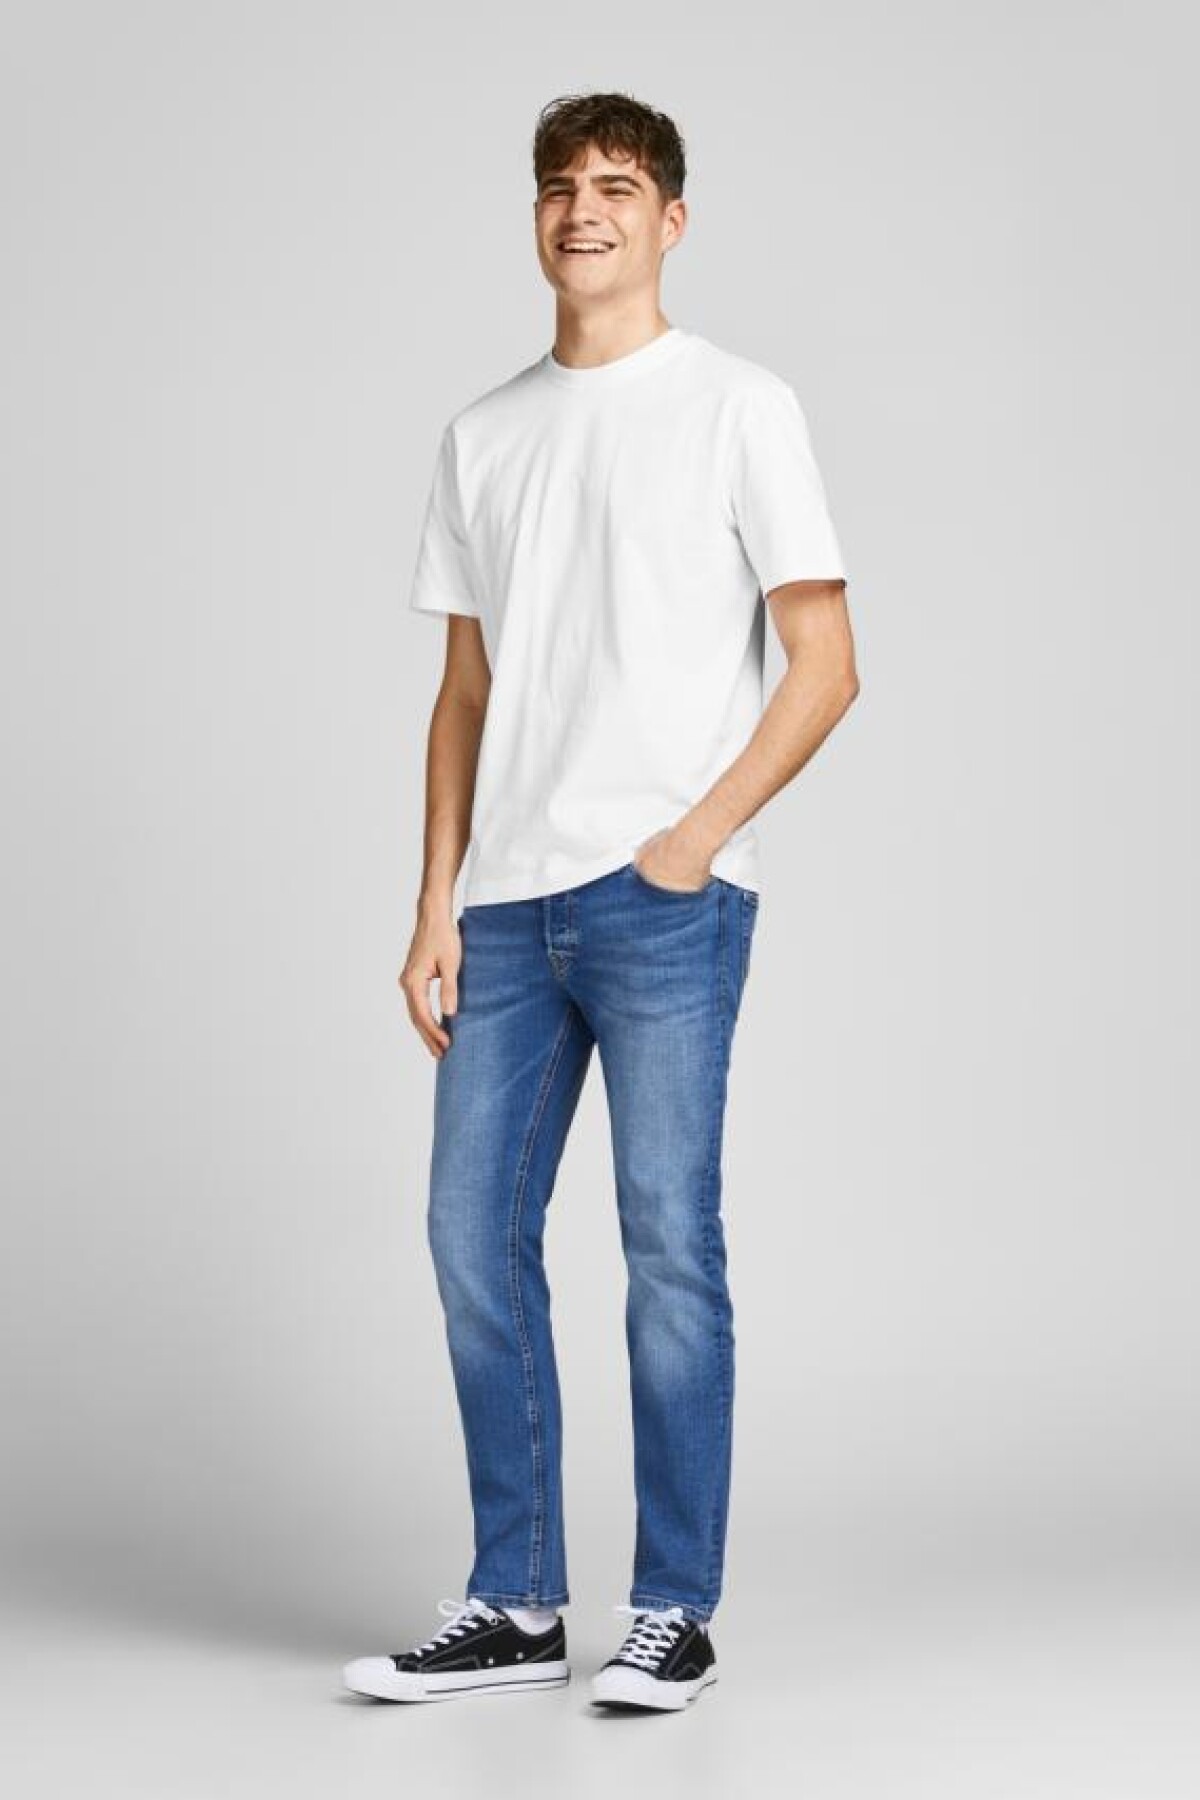 Camiseta Relaxed Básica Oversize White